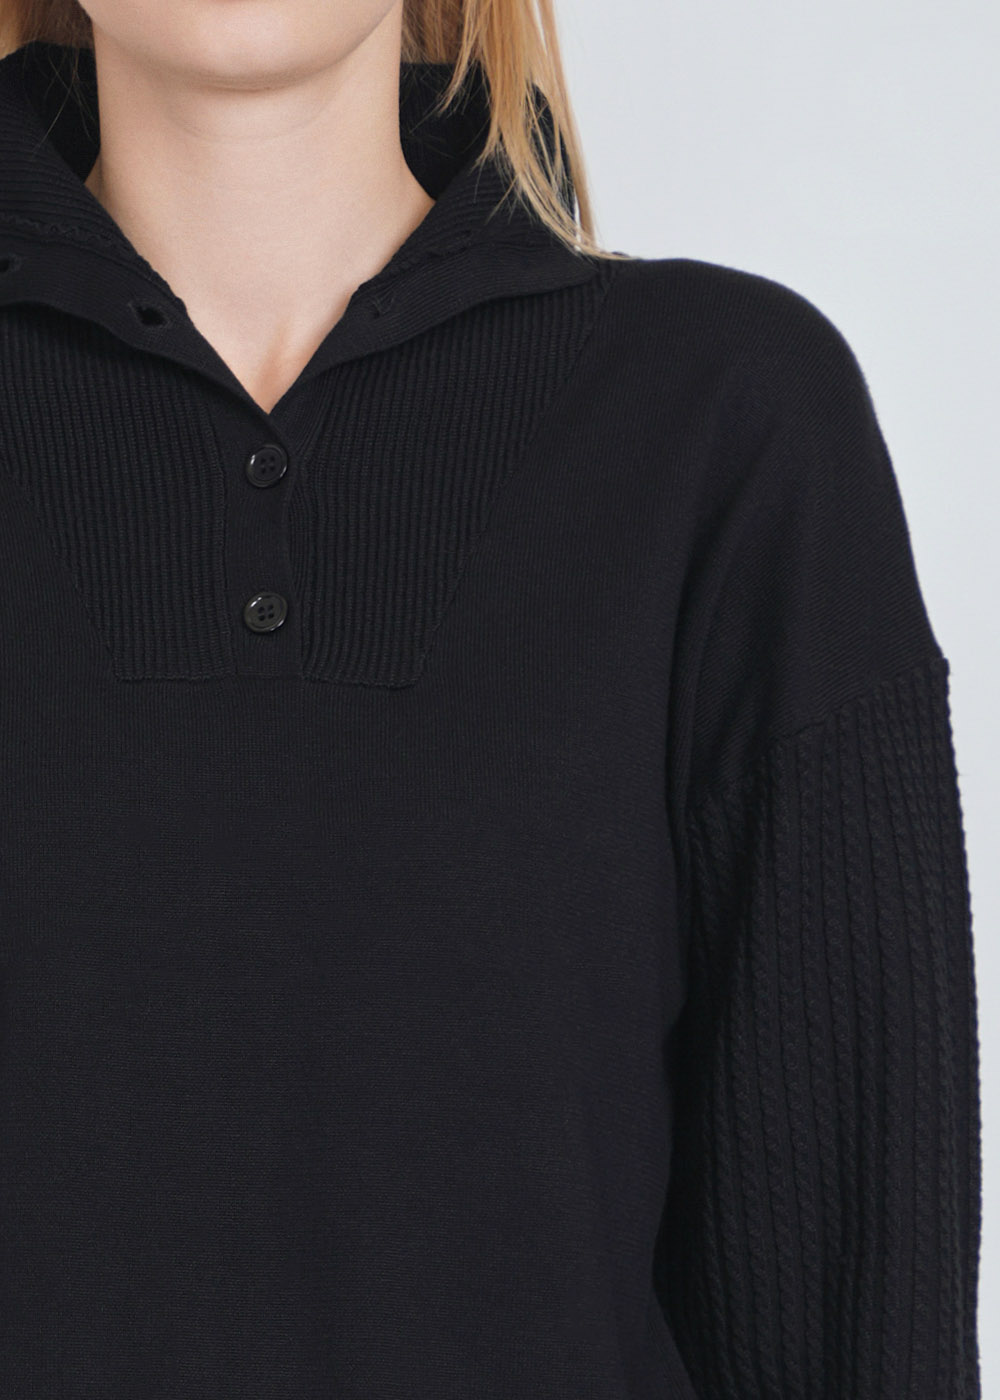 Elegant Buttoned Black Knit High Neck Sweater